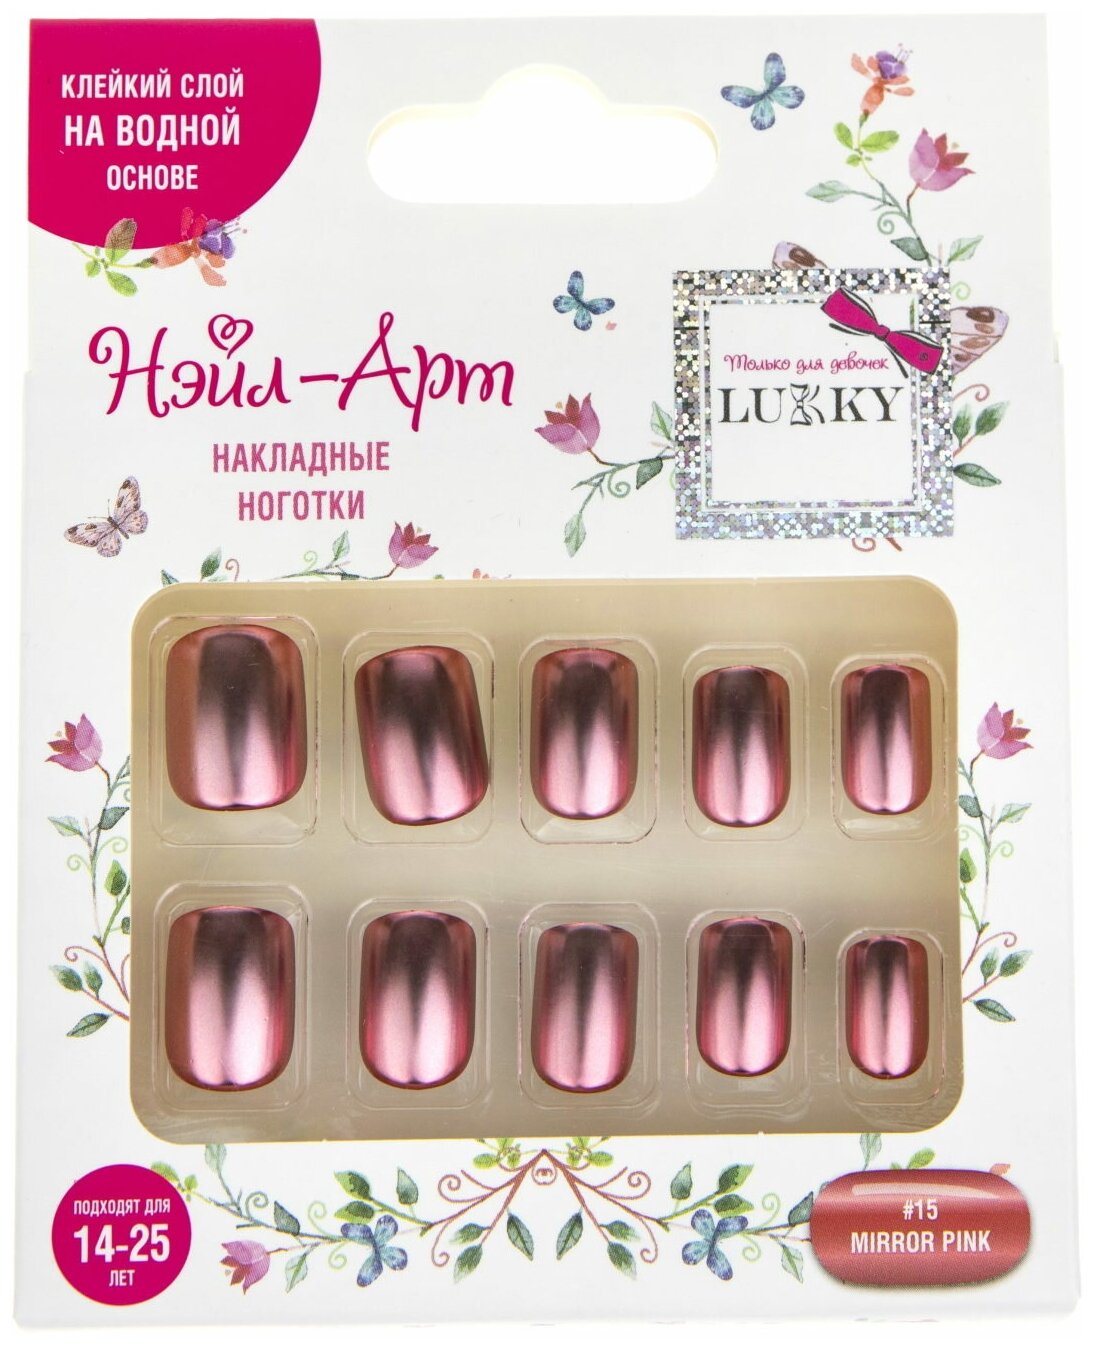 Lukky Нэйл-Арт Набор #15 Mirror Pink 10 накладных ногтей на клеевой основе